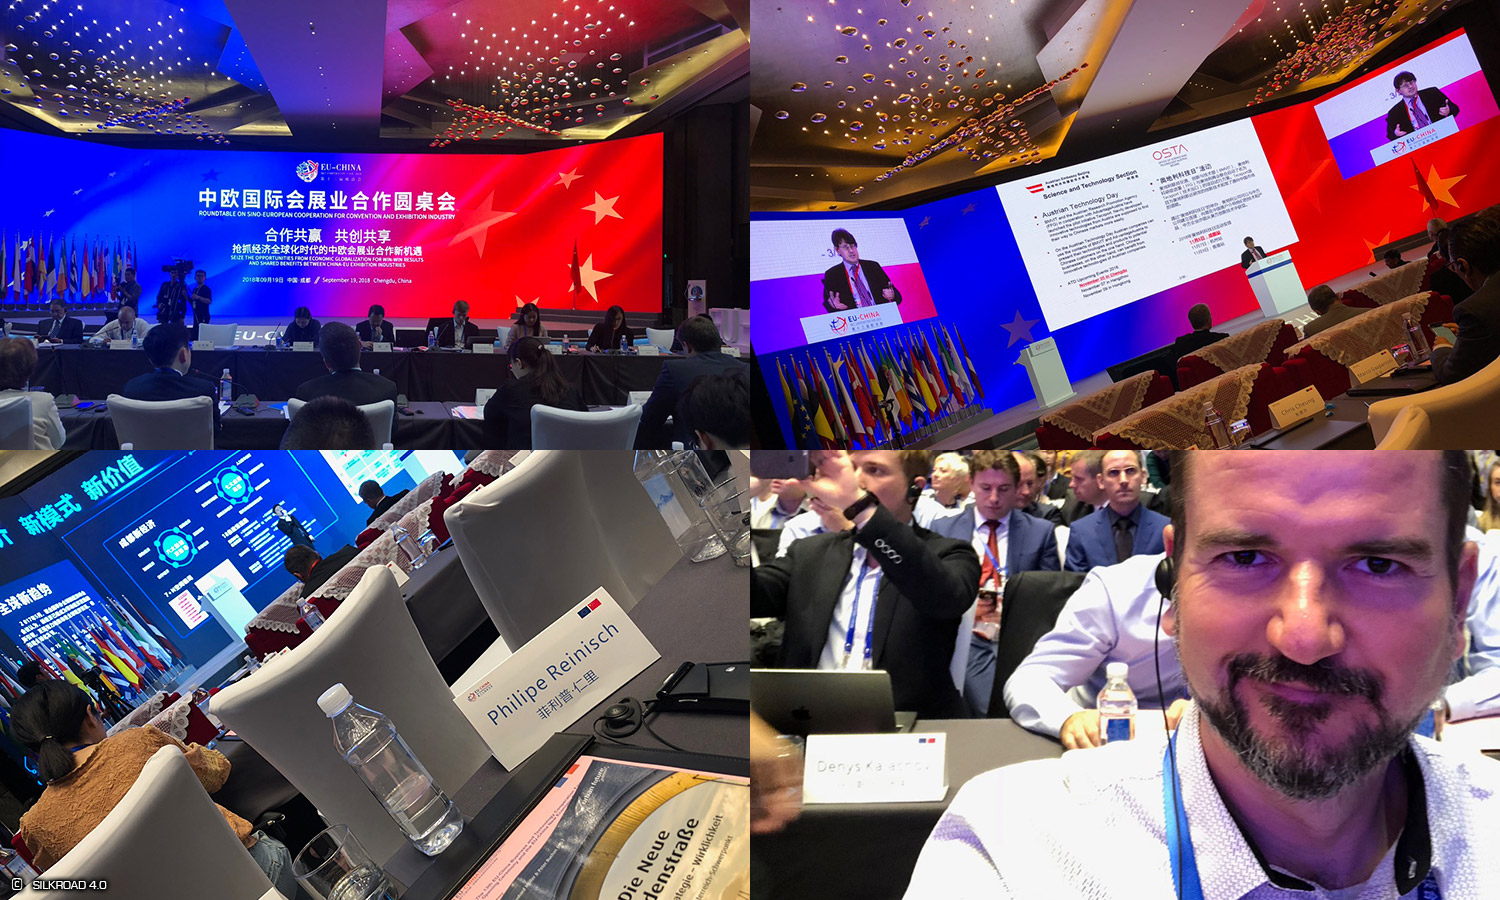 13th EU-China Business & Technology Conference, Cheng Du, China